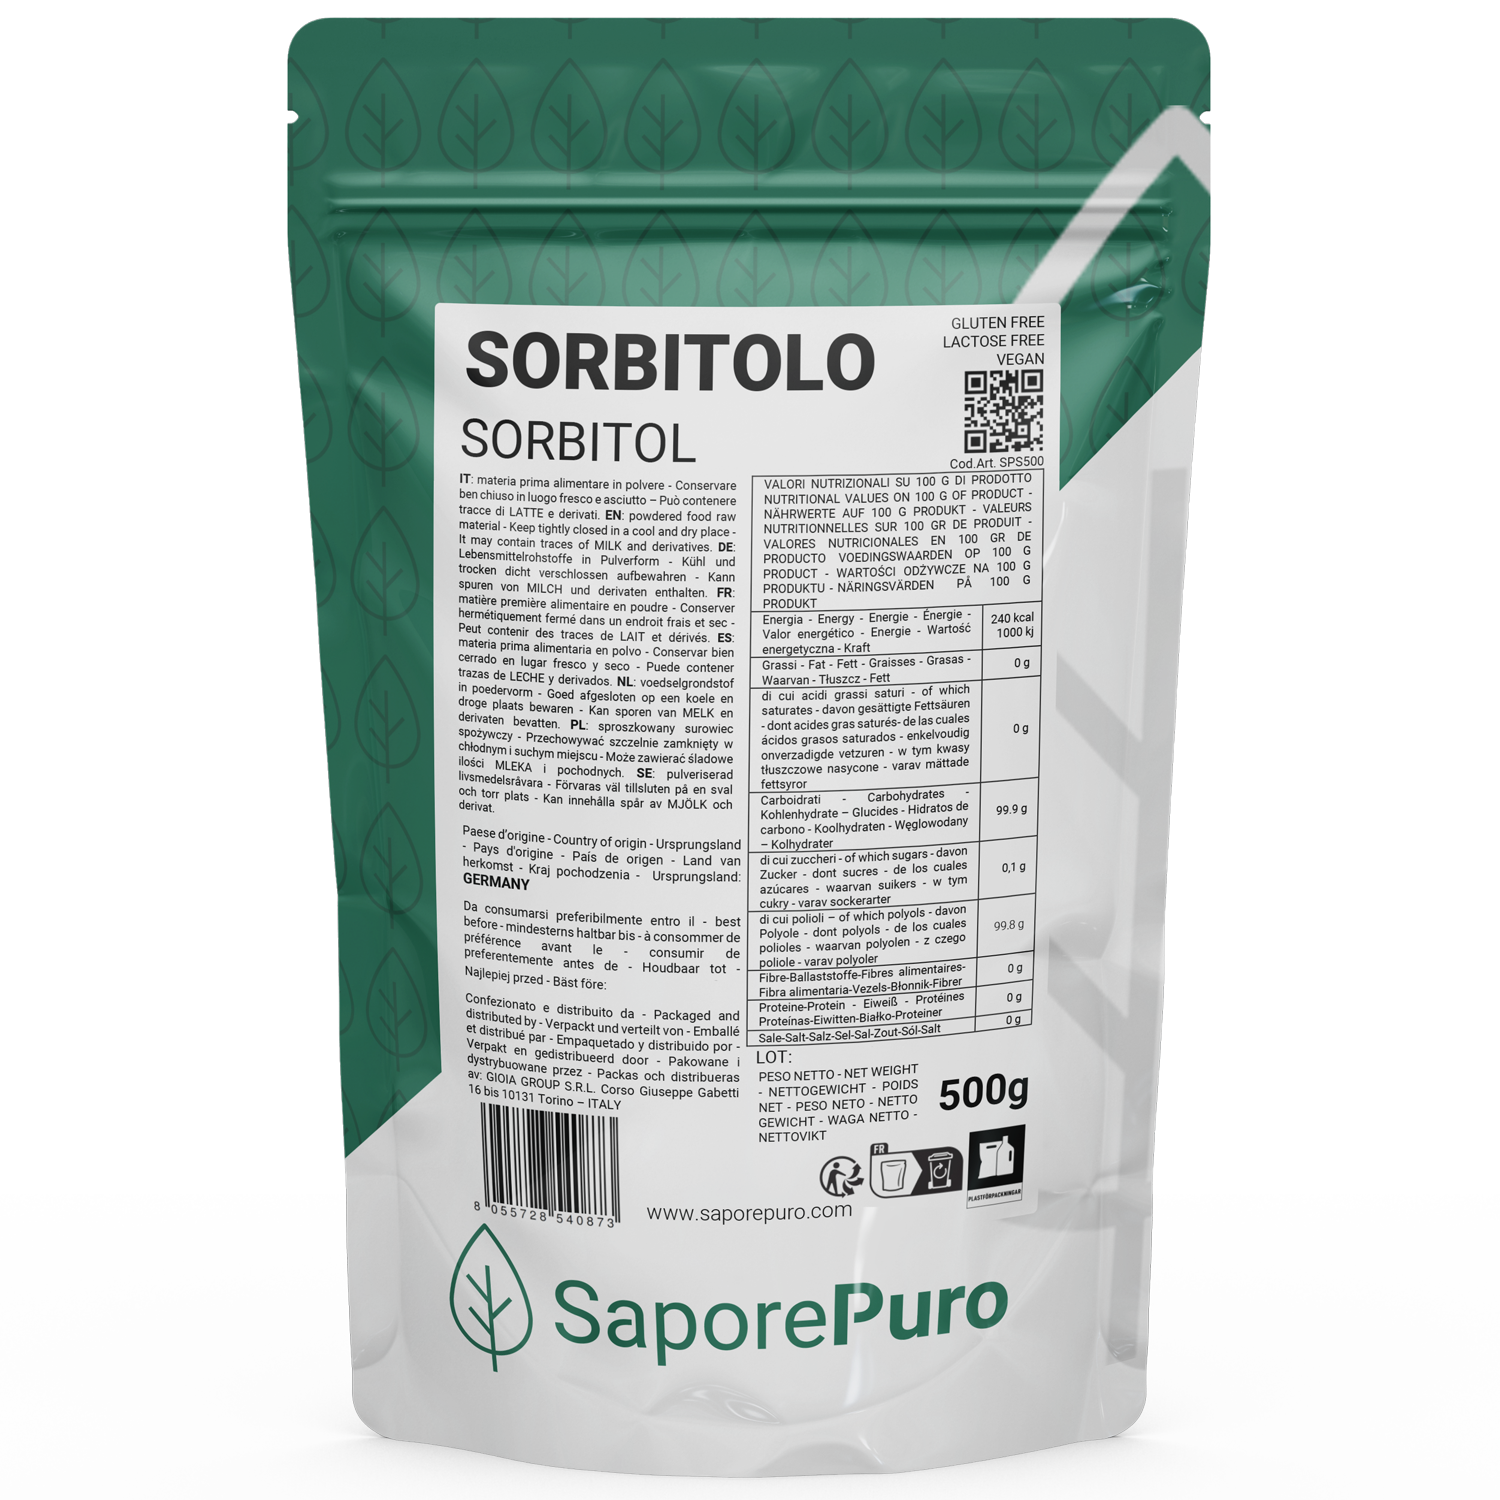 Sorbitolo - SaporePuro